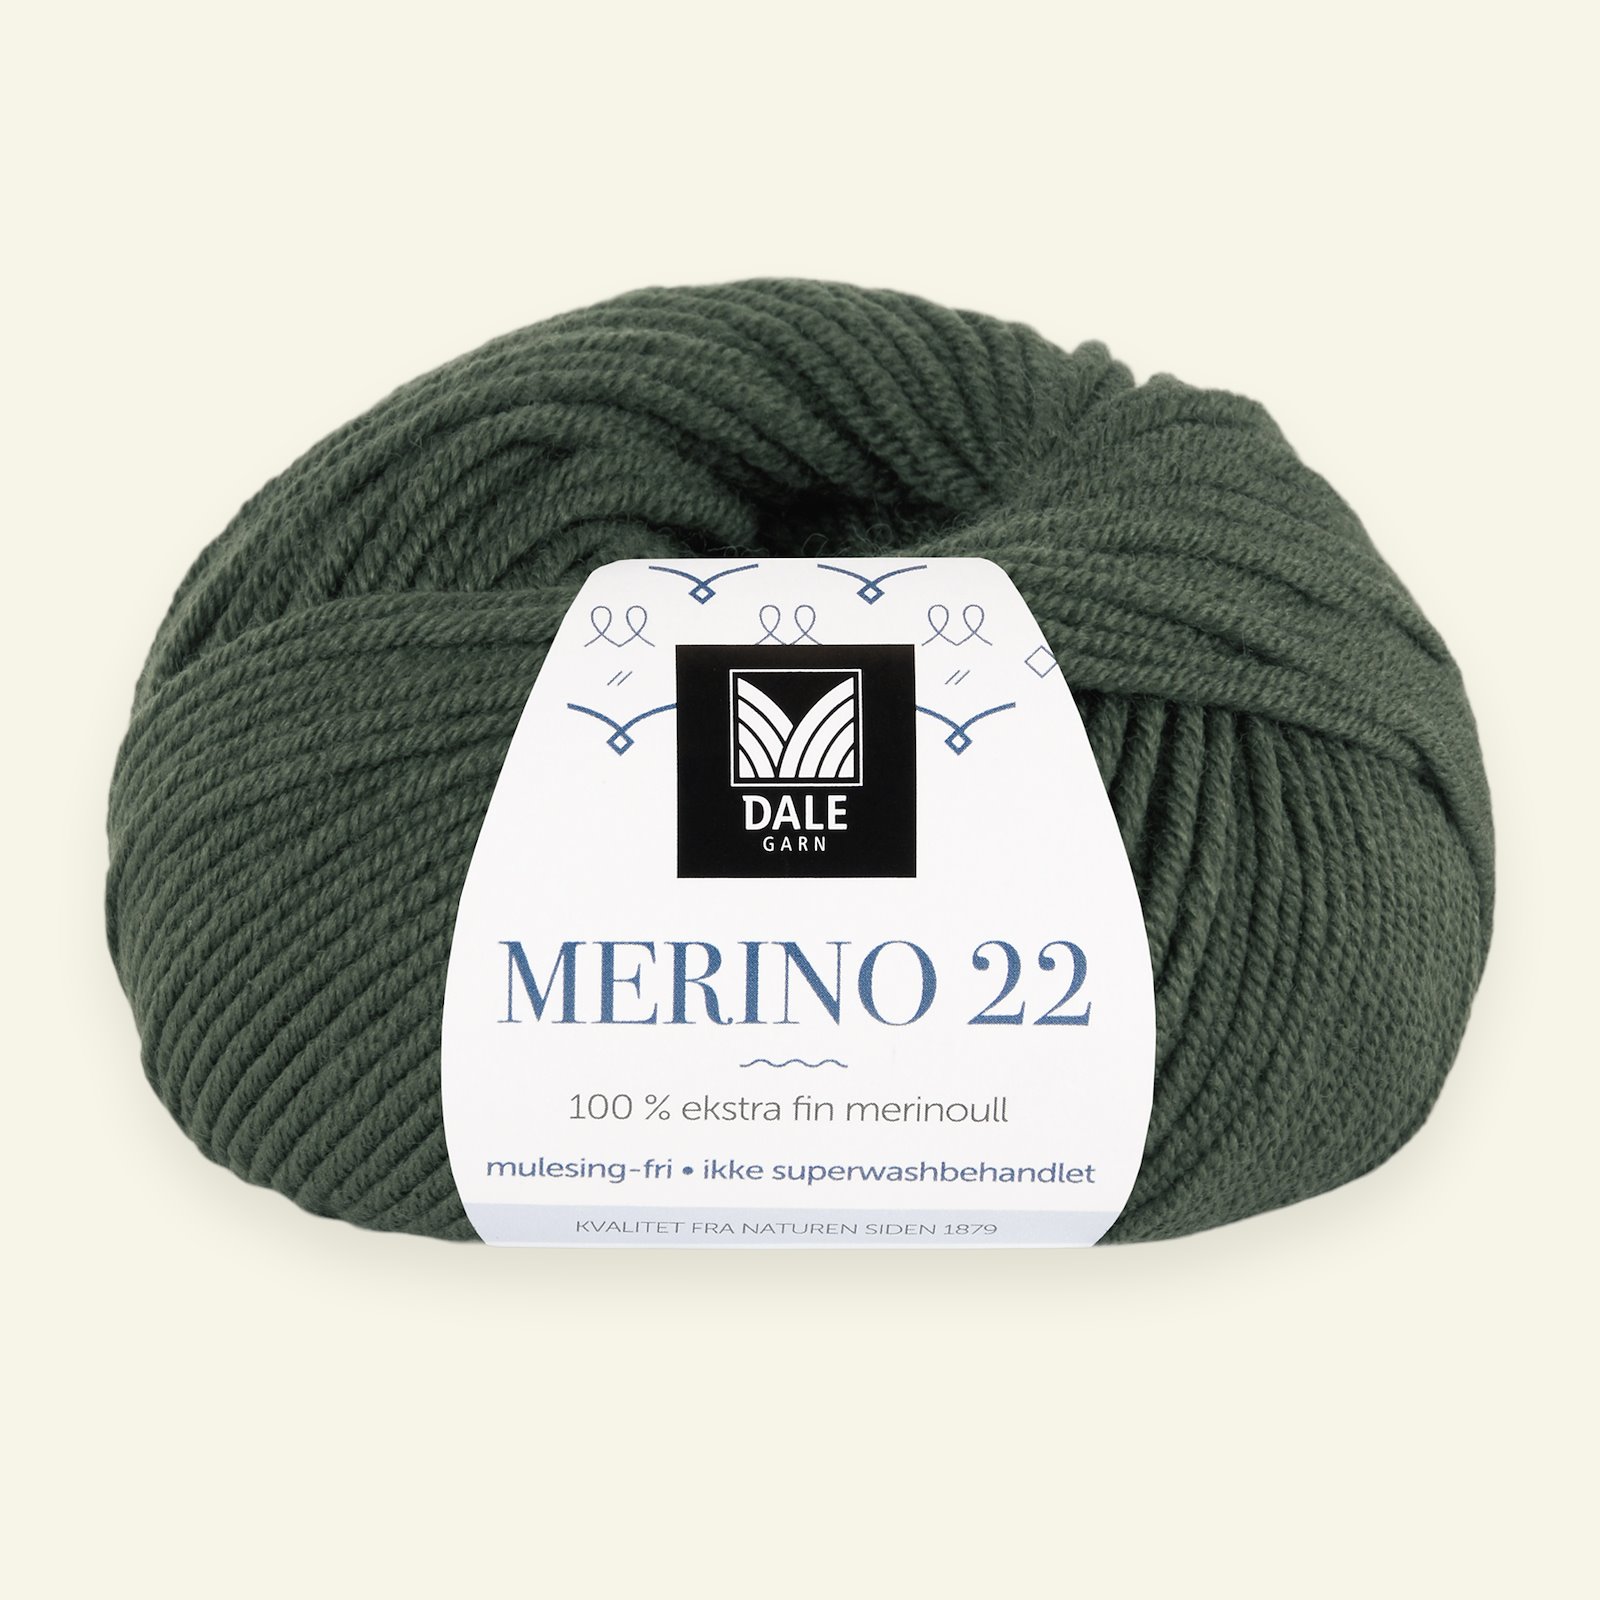 Dale Garn, 100% ekstra fint merinogarn "Merino 22", army grøn (2014) 90000375_pack